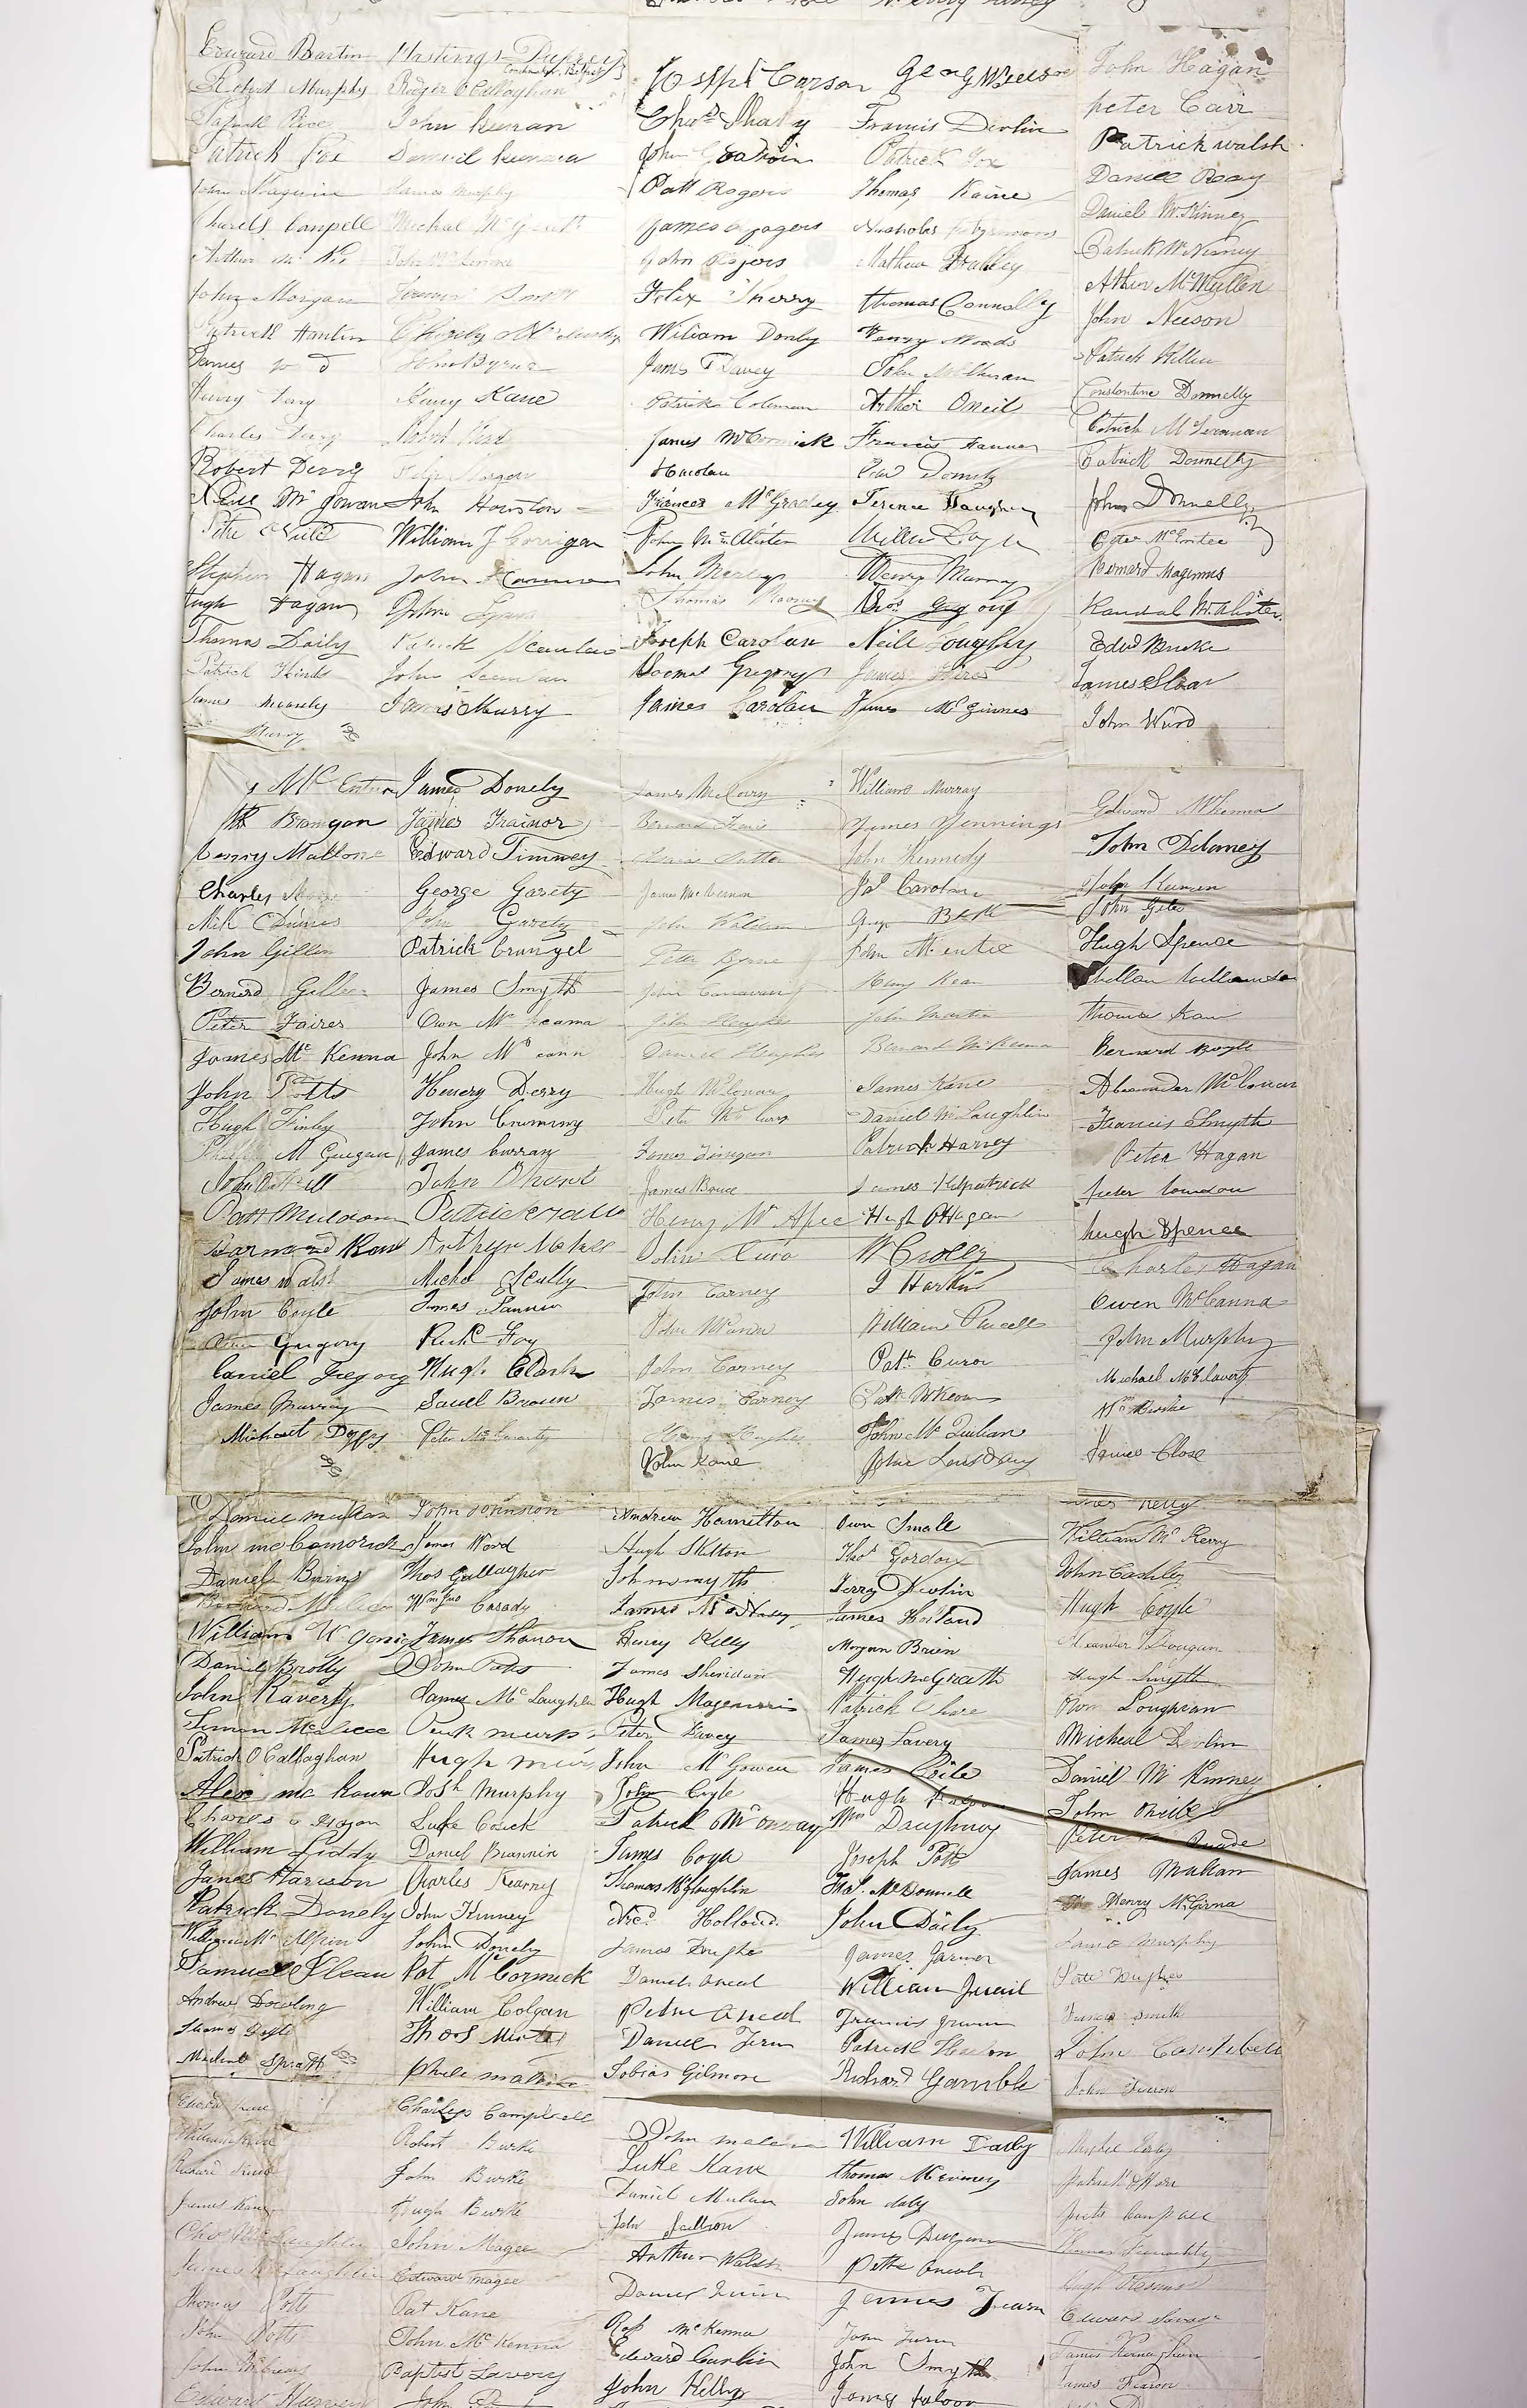 C:\Users\Virginia Rundle\Documents\Ancestry\Kilpatrick\Lord Viscount Morpeth's Testimonial Roll 1841.jpg